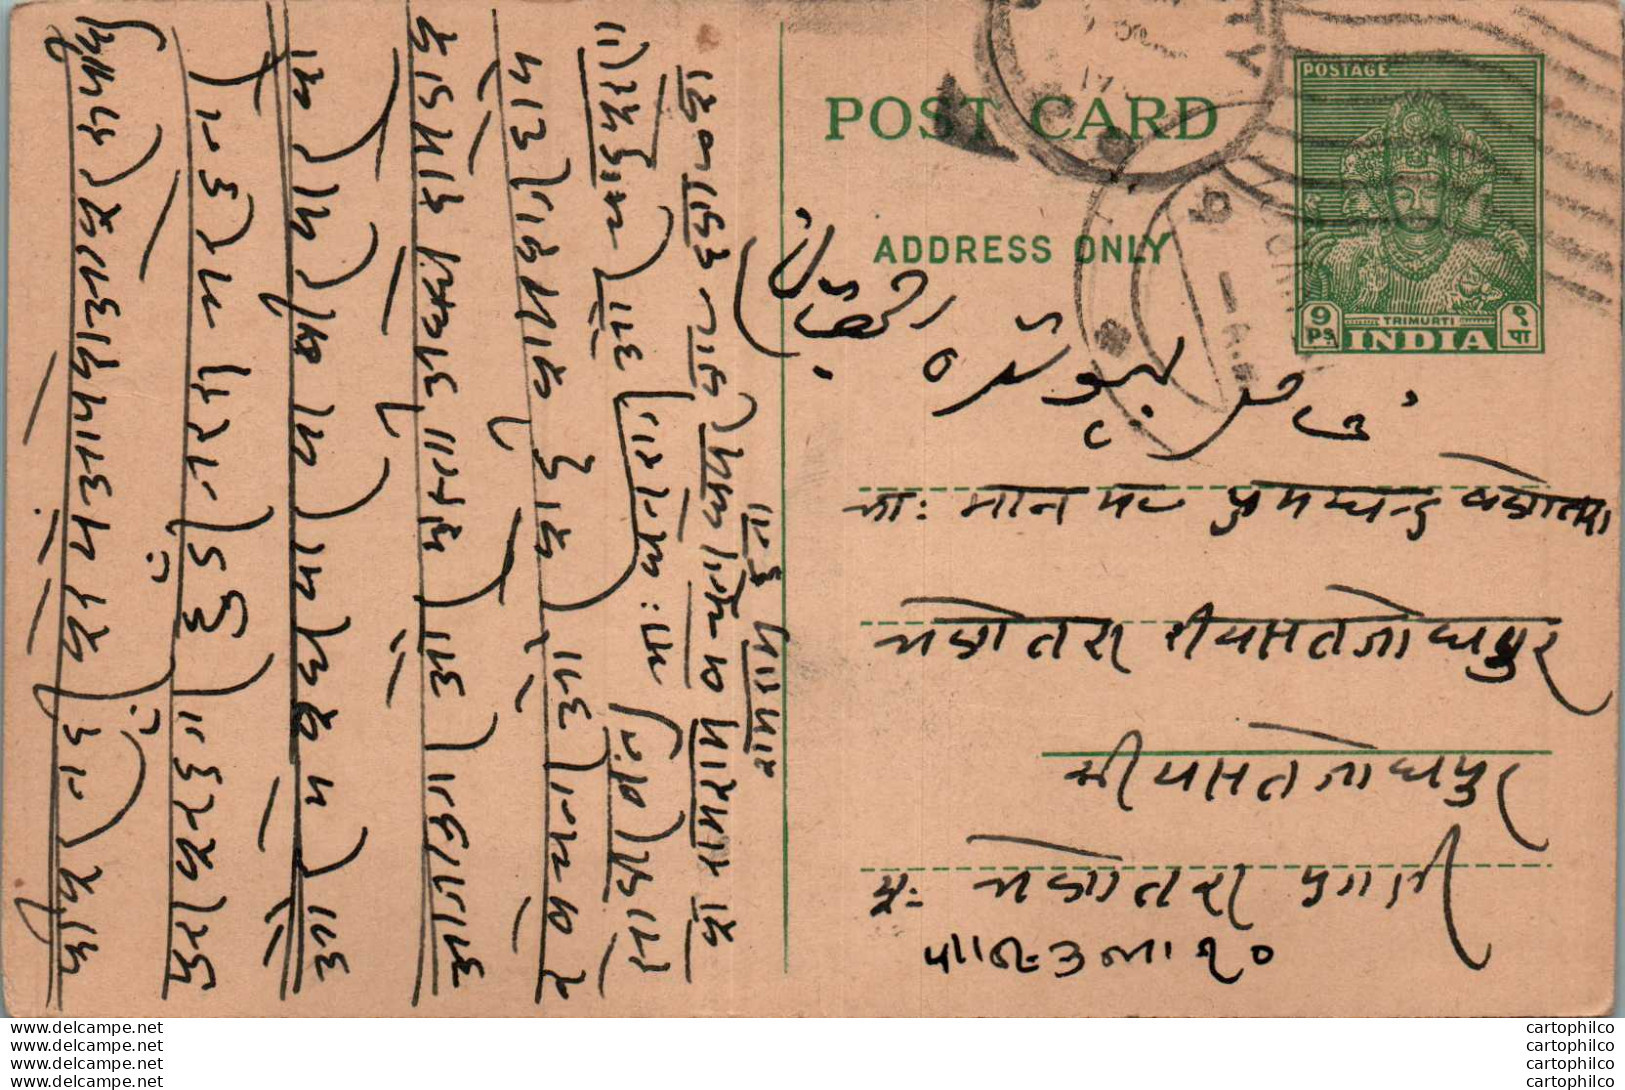 India Postal Stationery 9p - Postkaarten